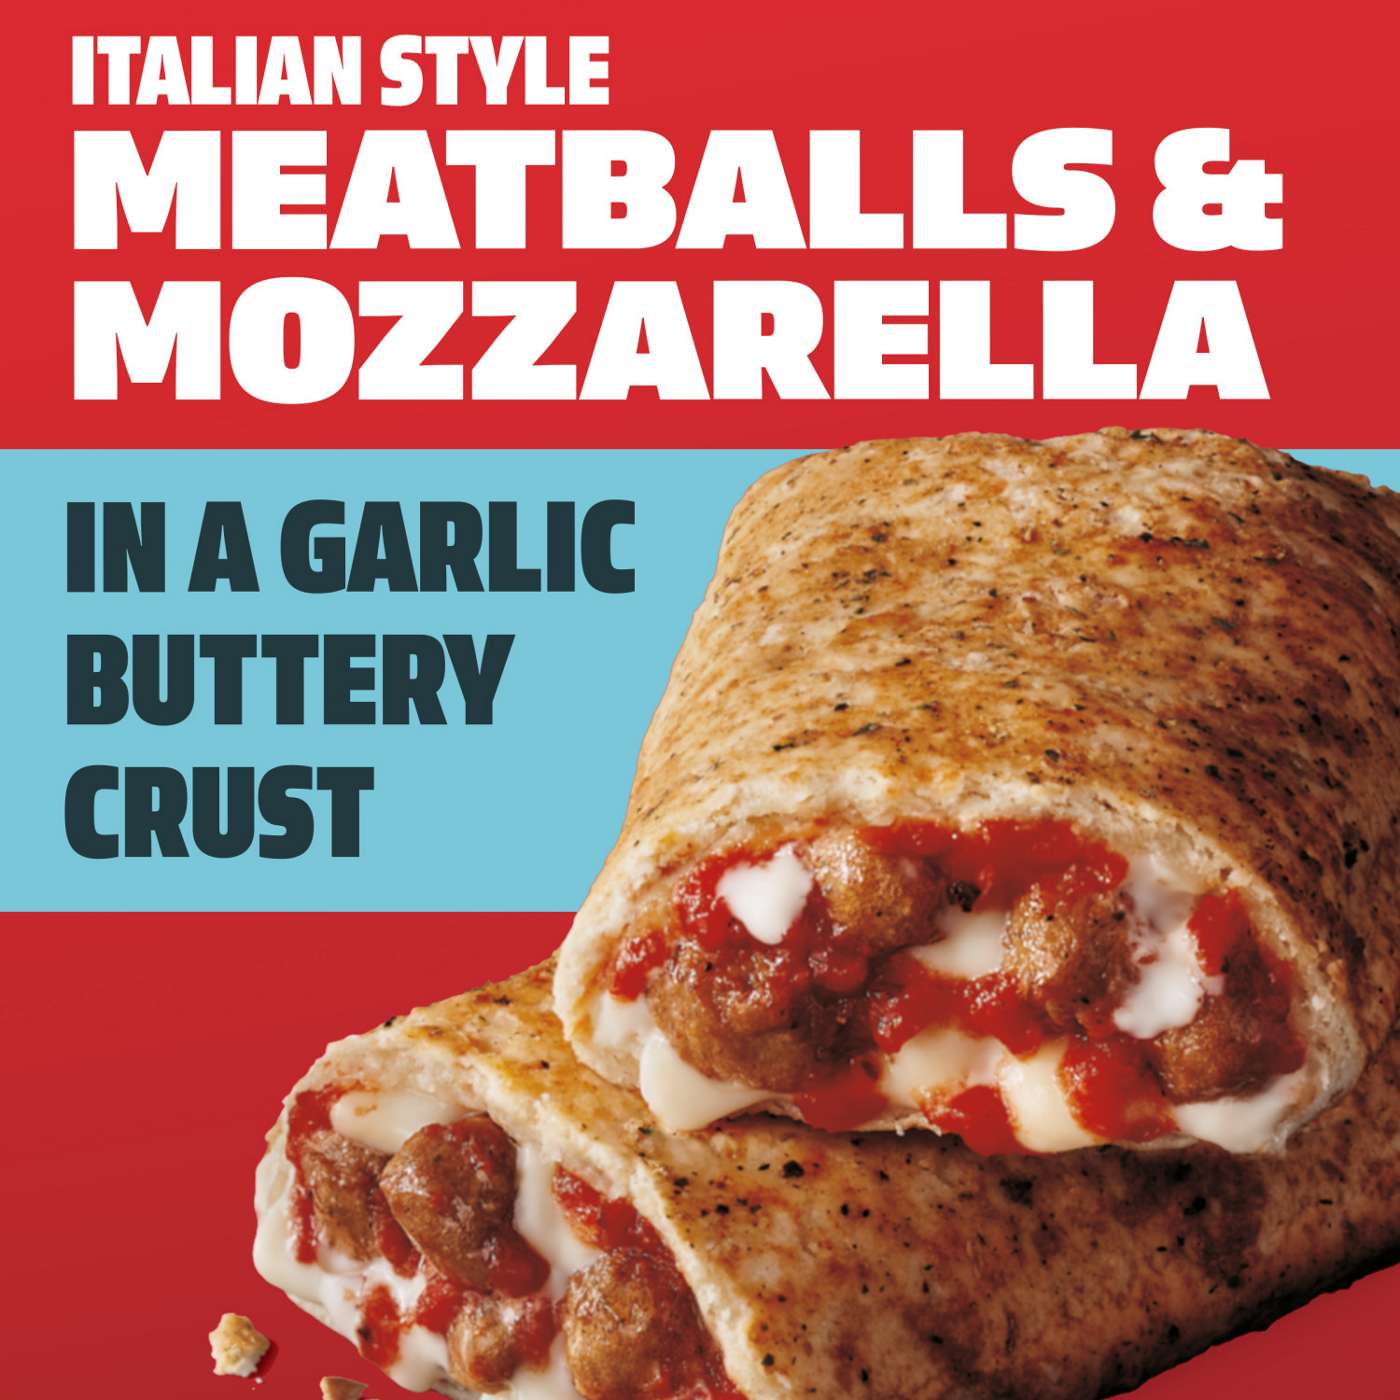 Hot Pockets Italian-Style Meatballs & Mozzarella Frozen Sandwiches - Garlic Buttery Crust; image 6 of 8